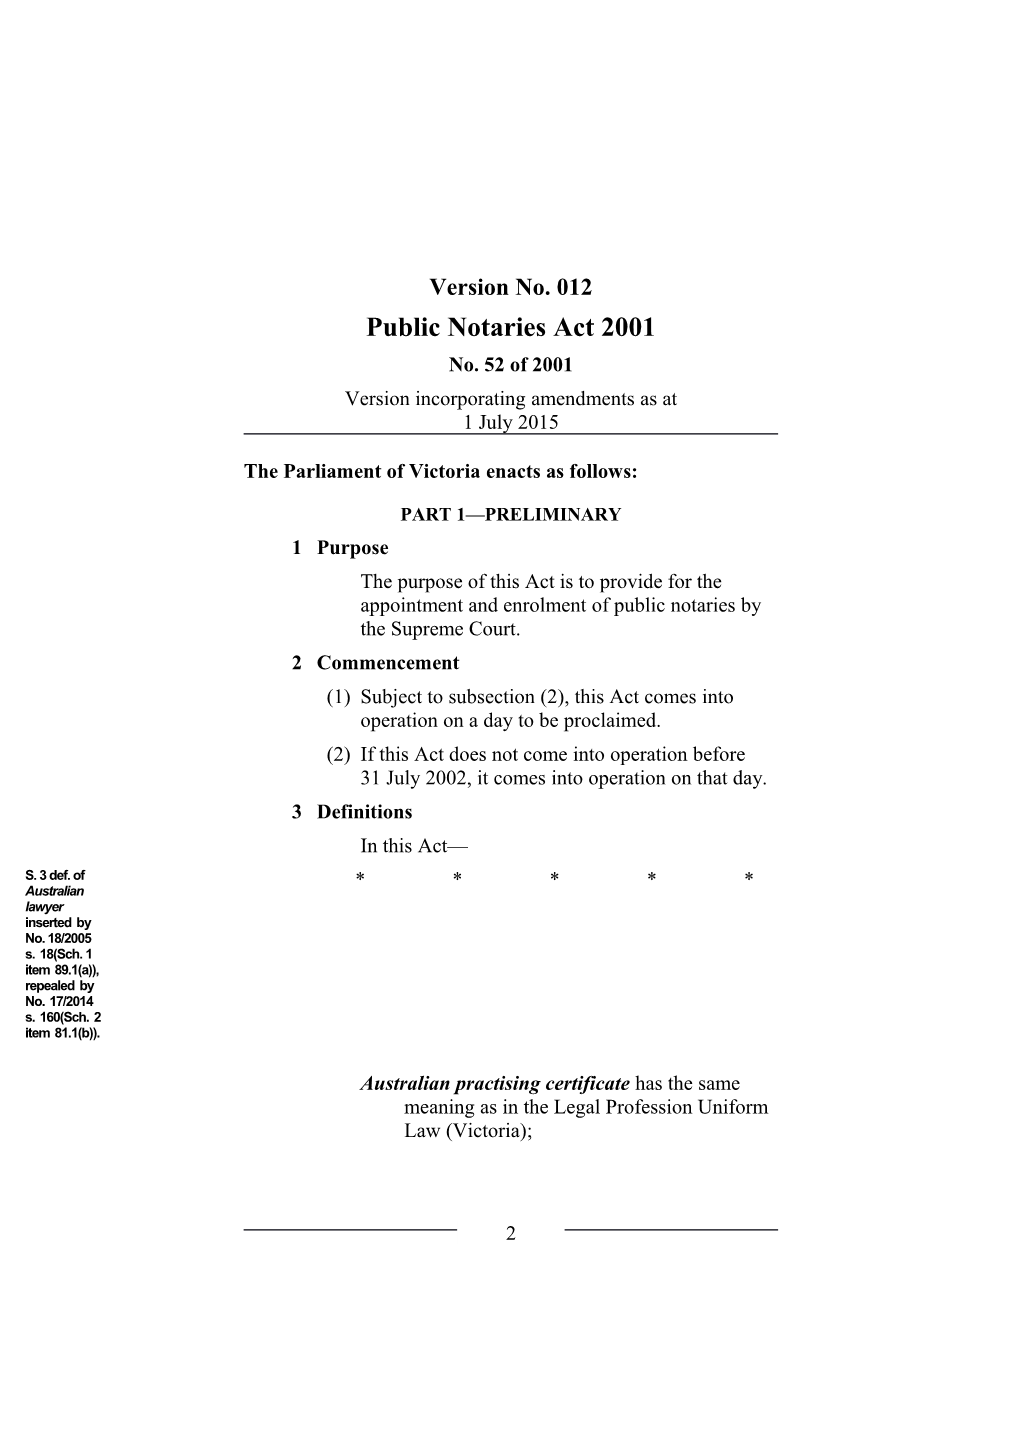 Public Notaries Act 2001